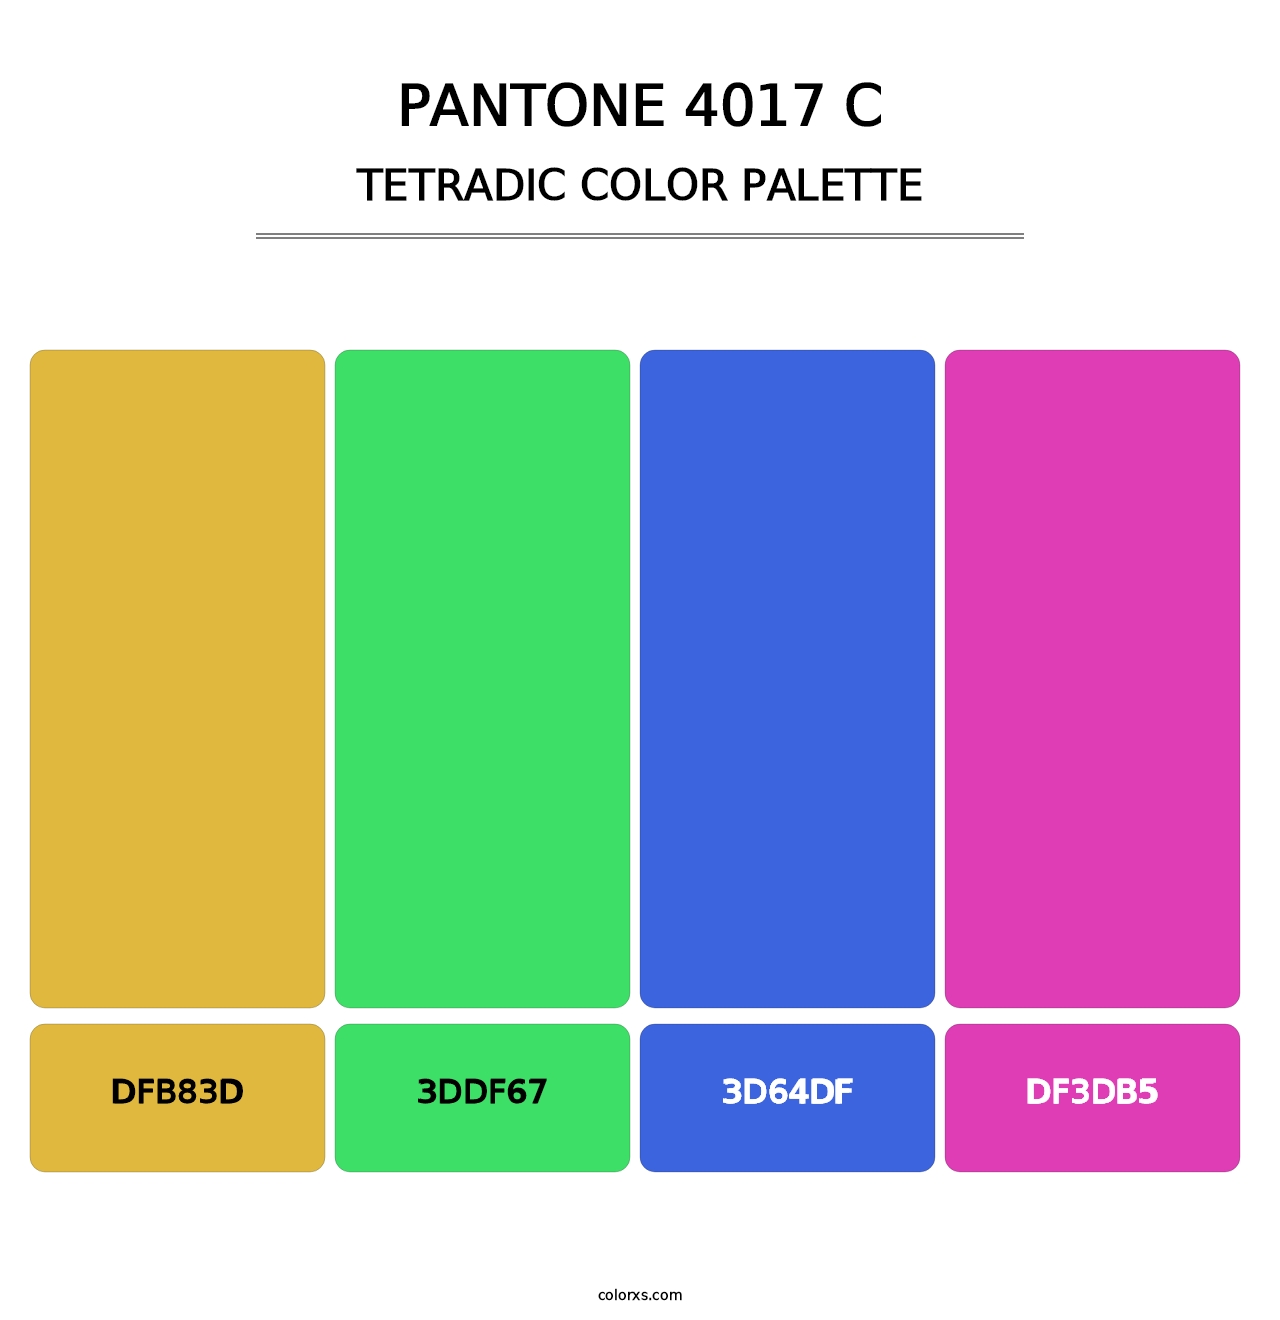 PANTONE 4017 C - Tetradic Color Palette